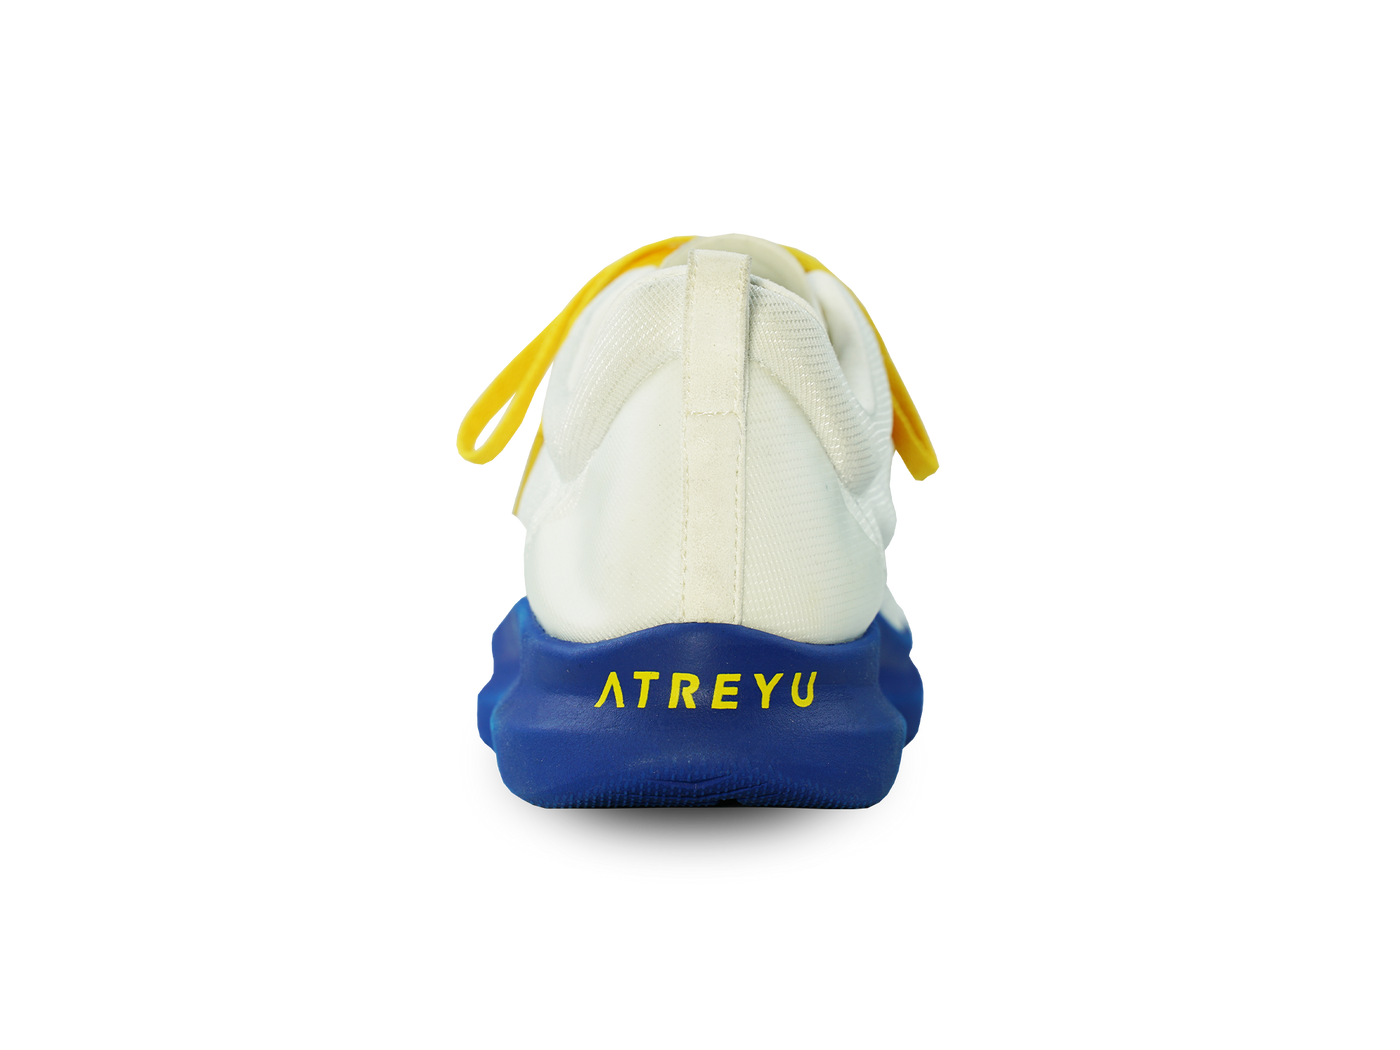 Atreyu Base Model - Lightweight running shoes back team